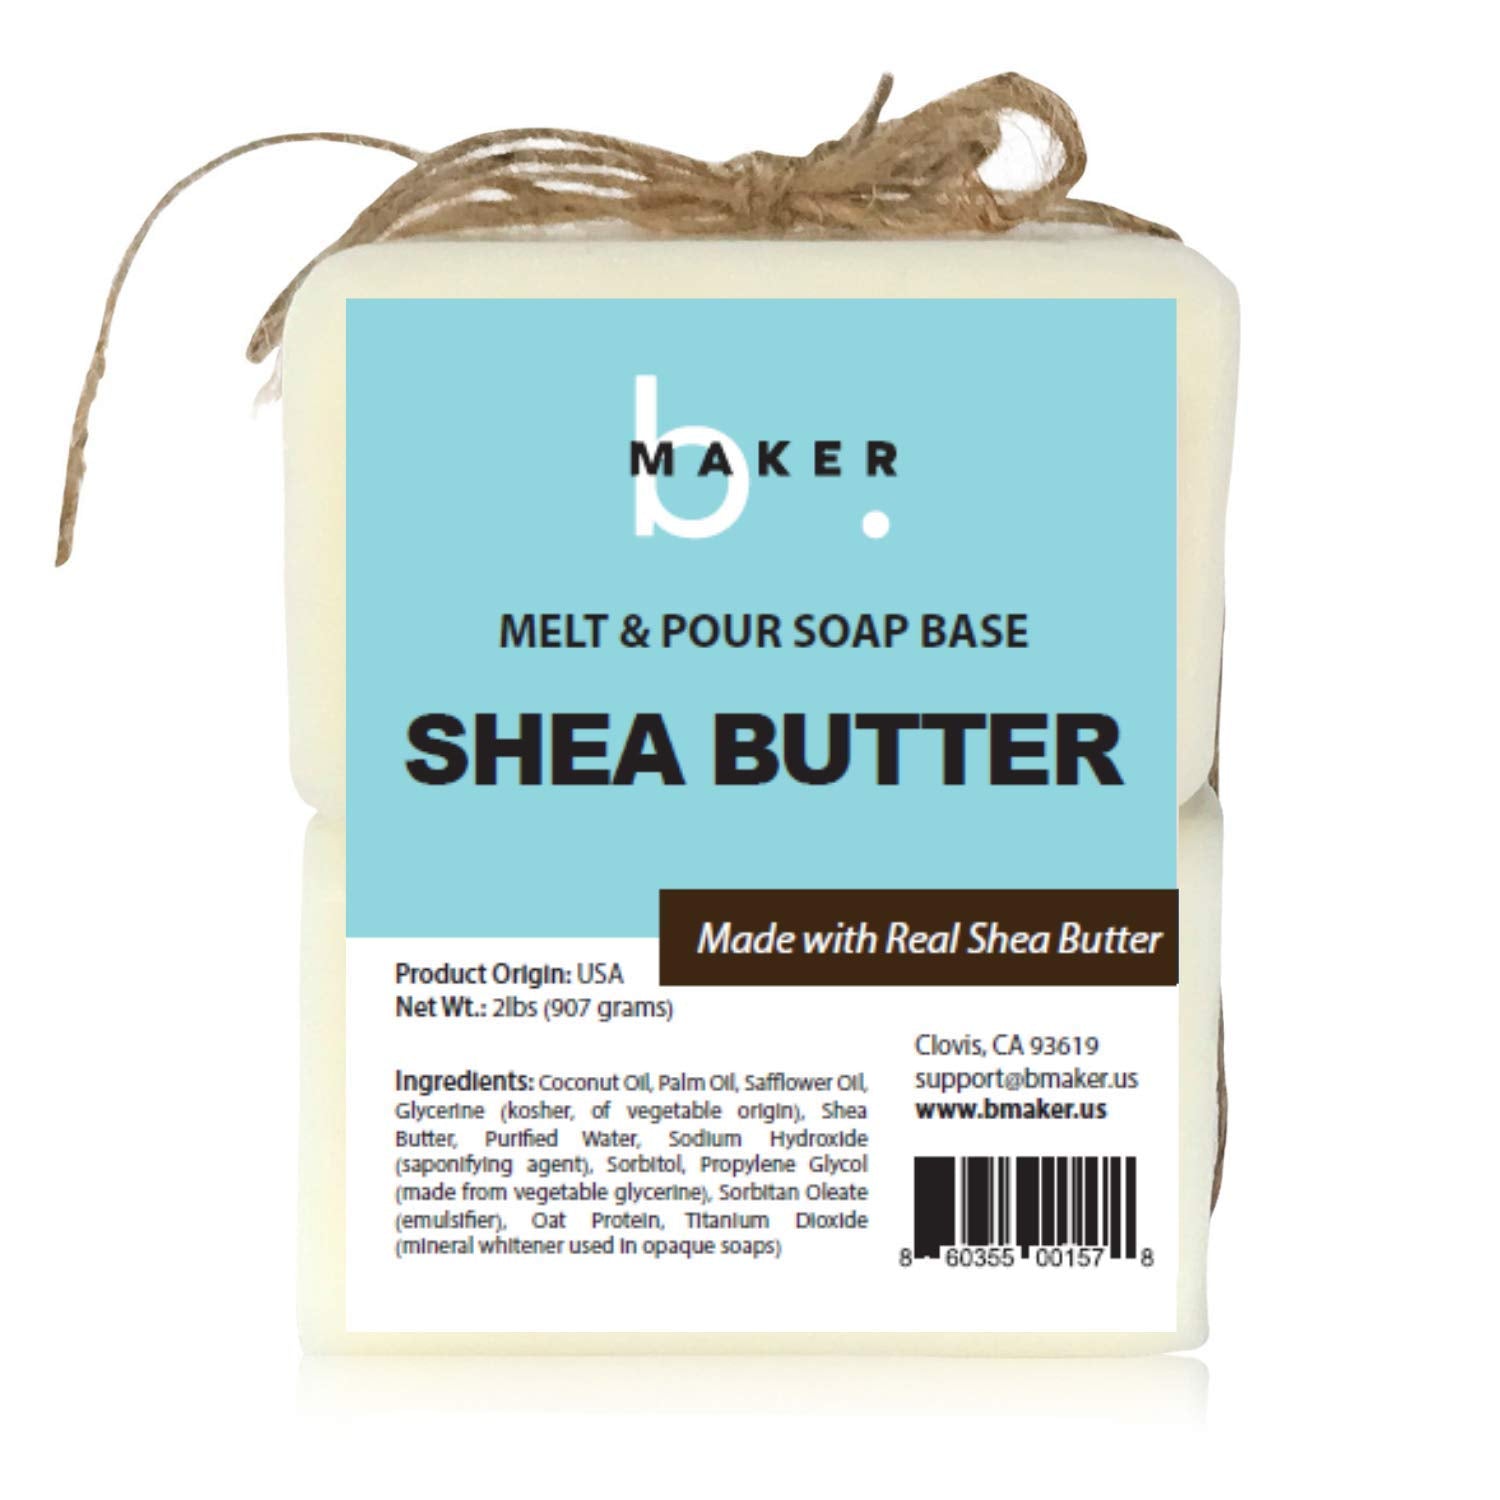 bMAKER All-Natural Shea Butter Melt and Pour Soap Base (2lb Blocks) - 